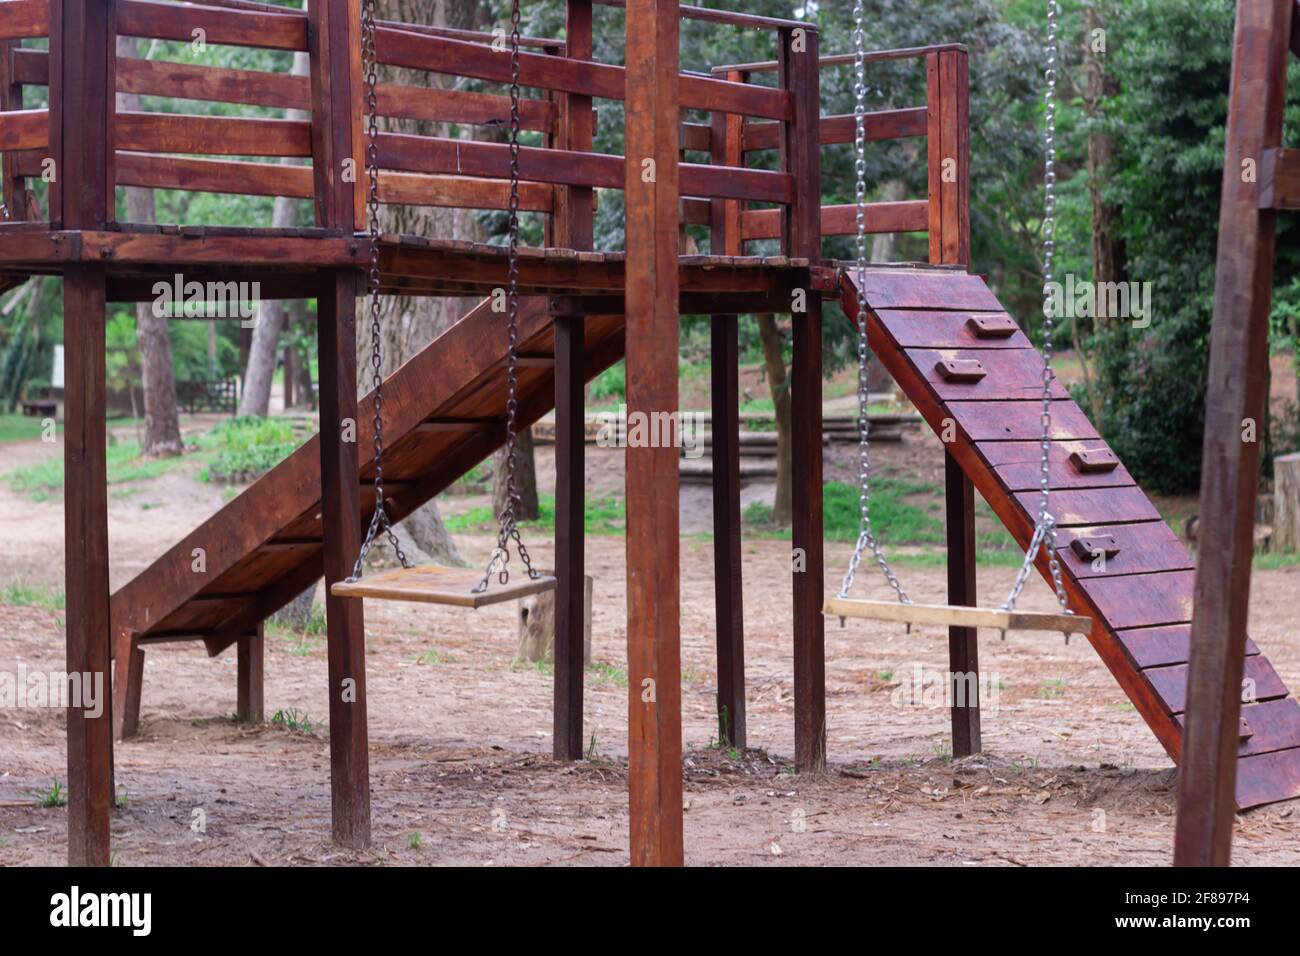 Wooden playground without kids during coronavirus. Stock Photo